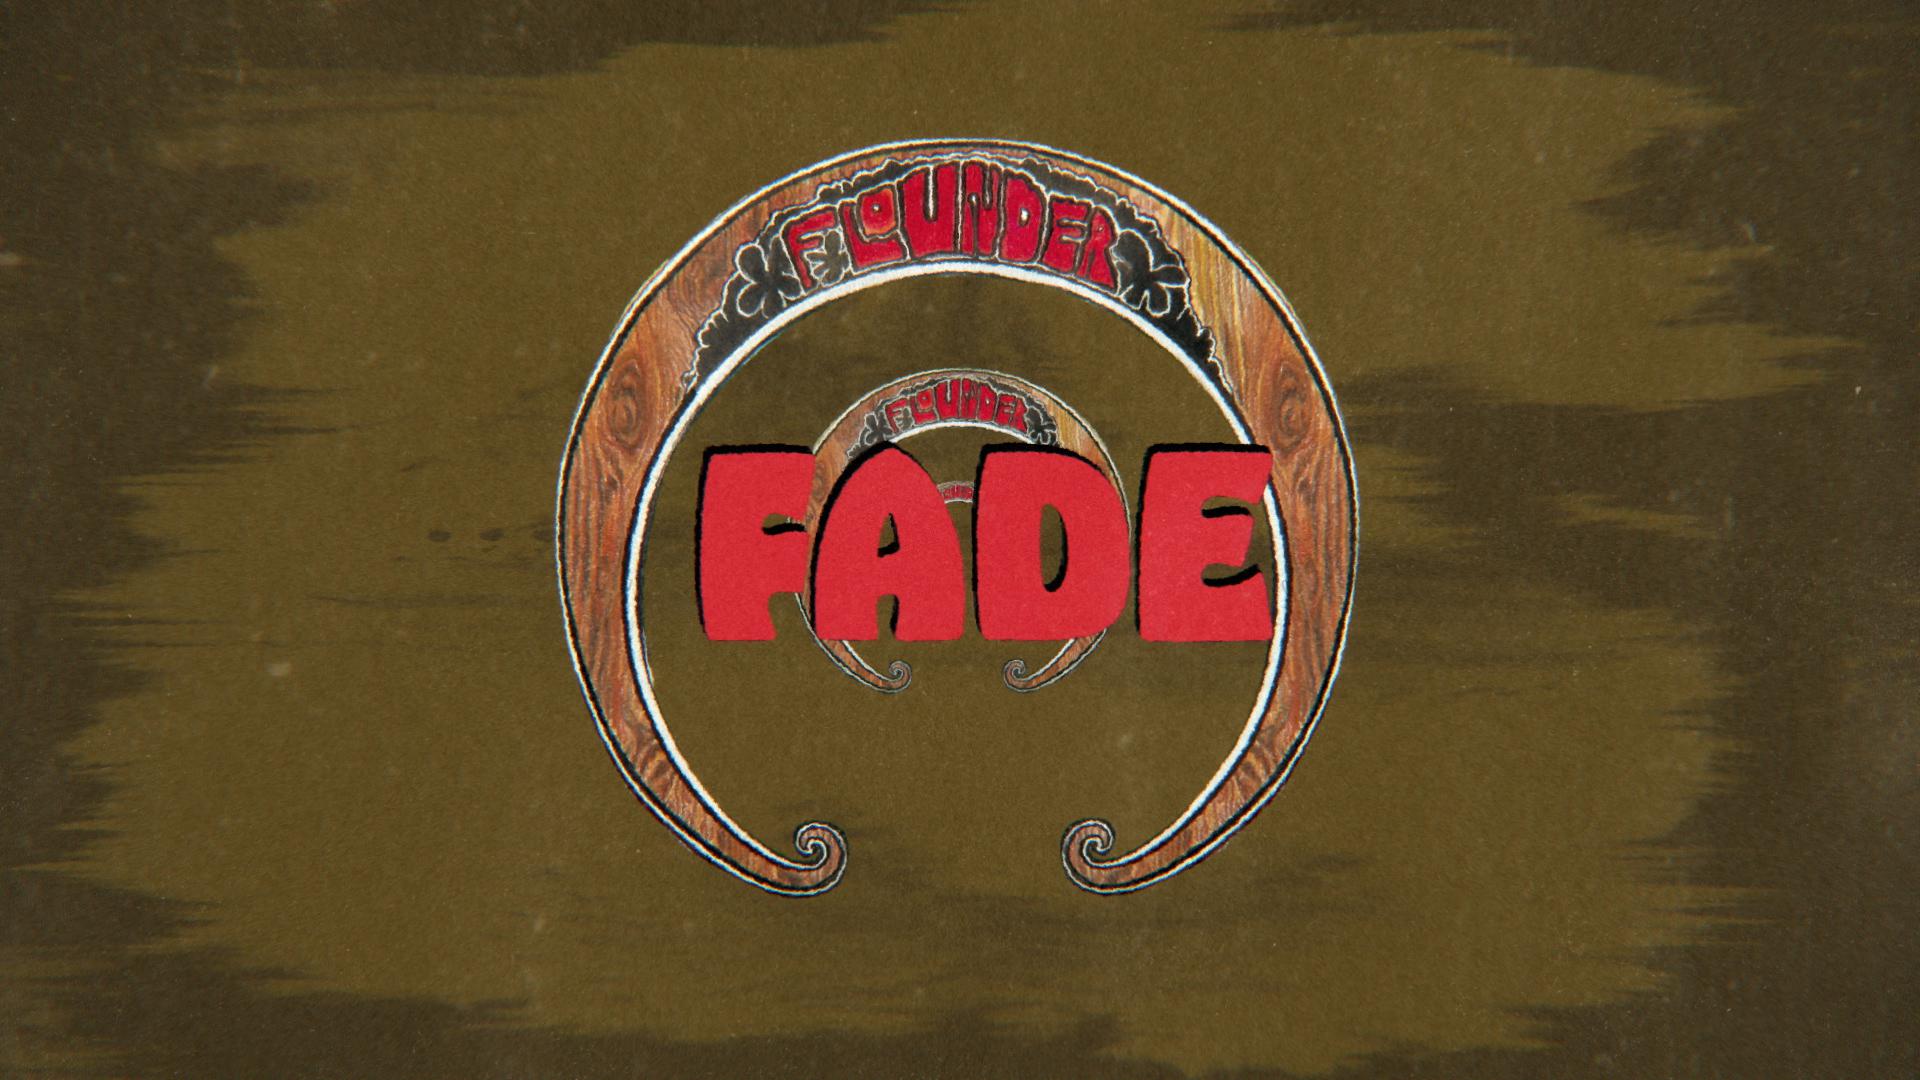 quinnie - fade (flounder bonus track - Official Lyric Video)